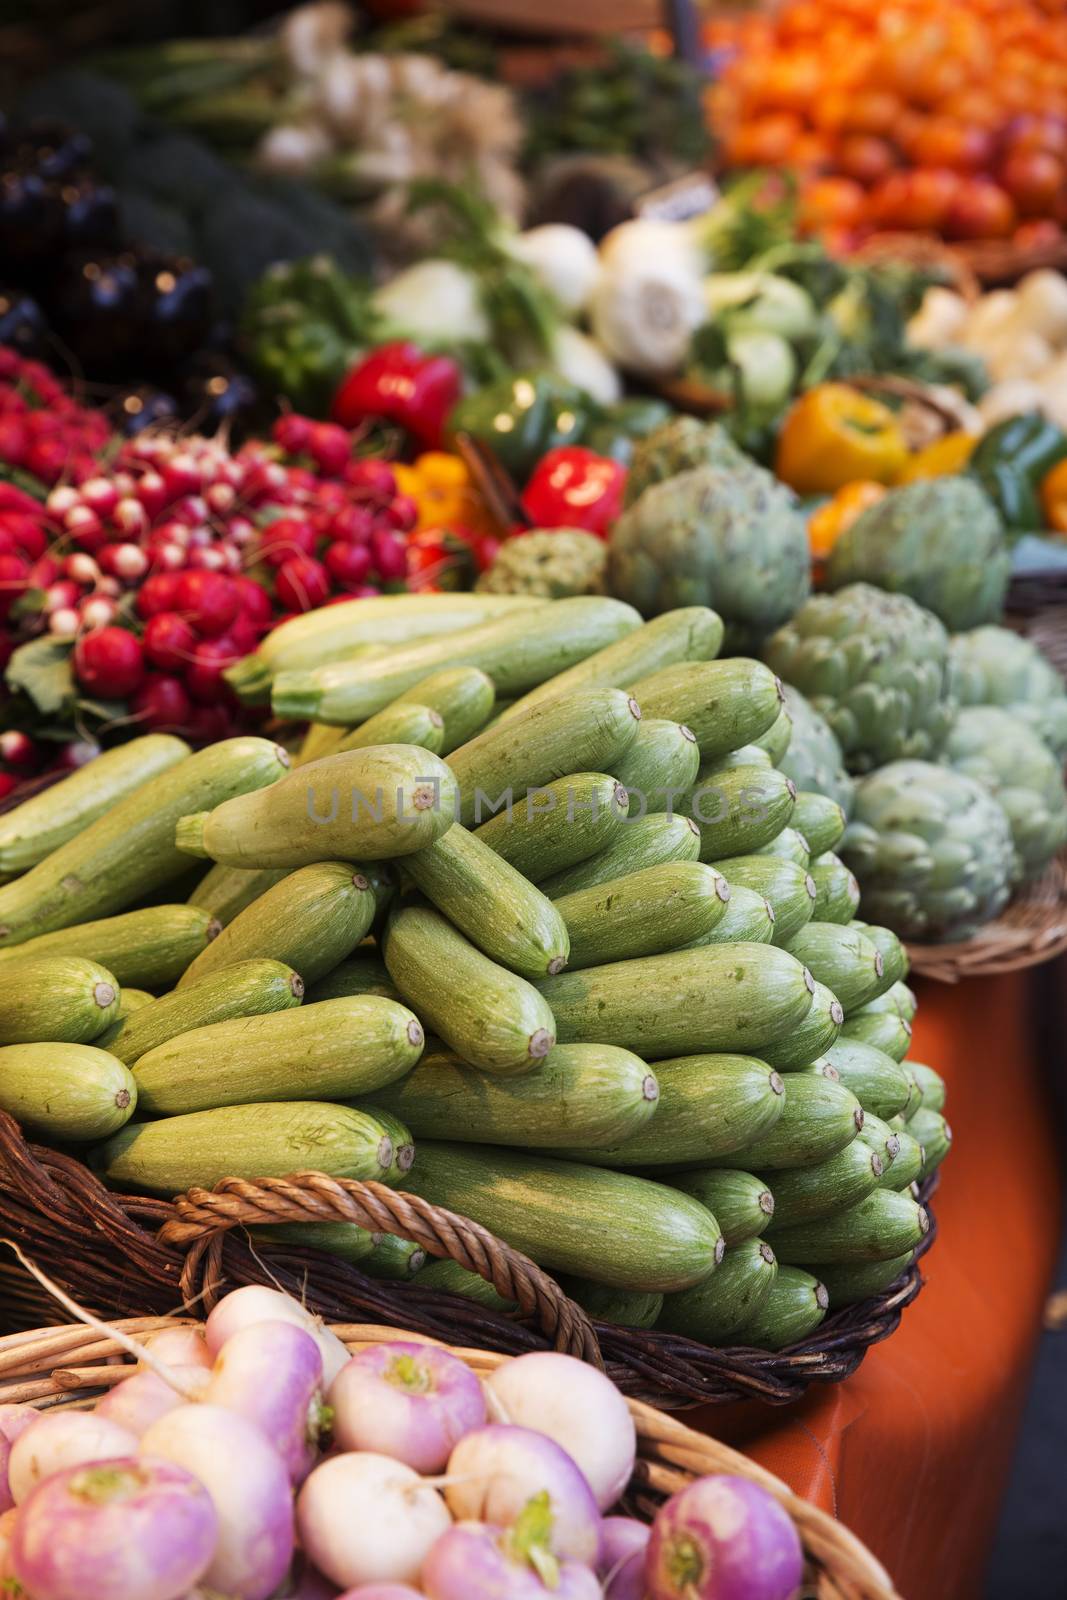 Scene at a Vegetable market in Paris by gemenacom